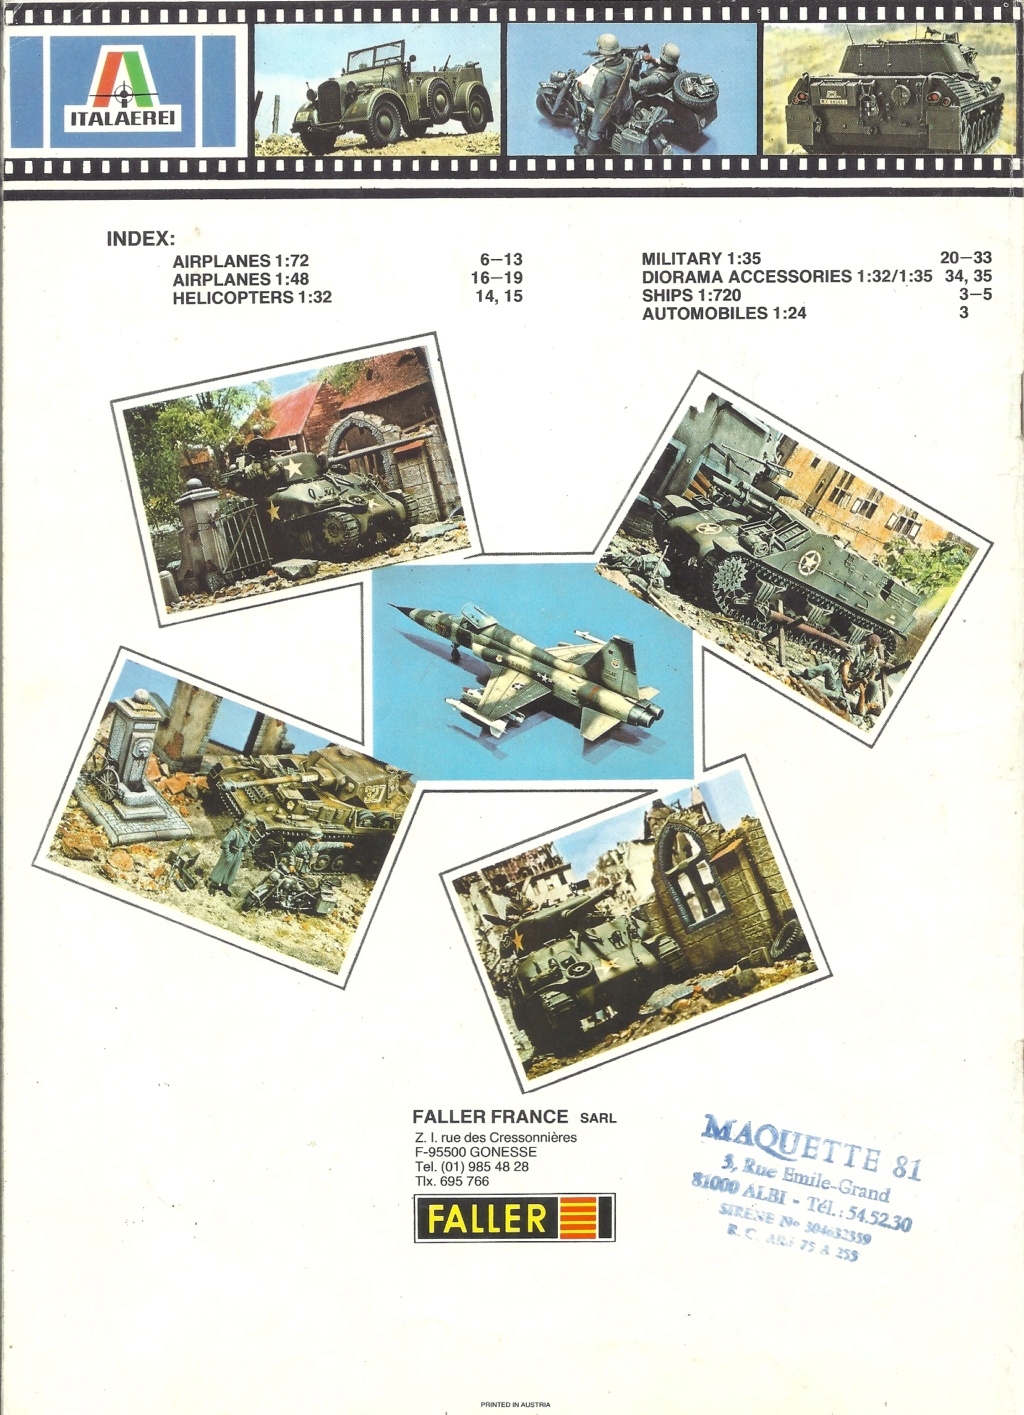 [ITALAEREI 1979] Catalogue 1979  Italae38